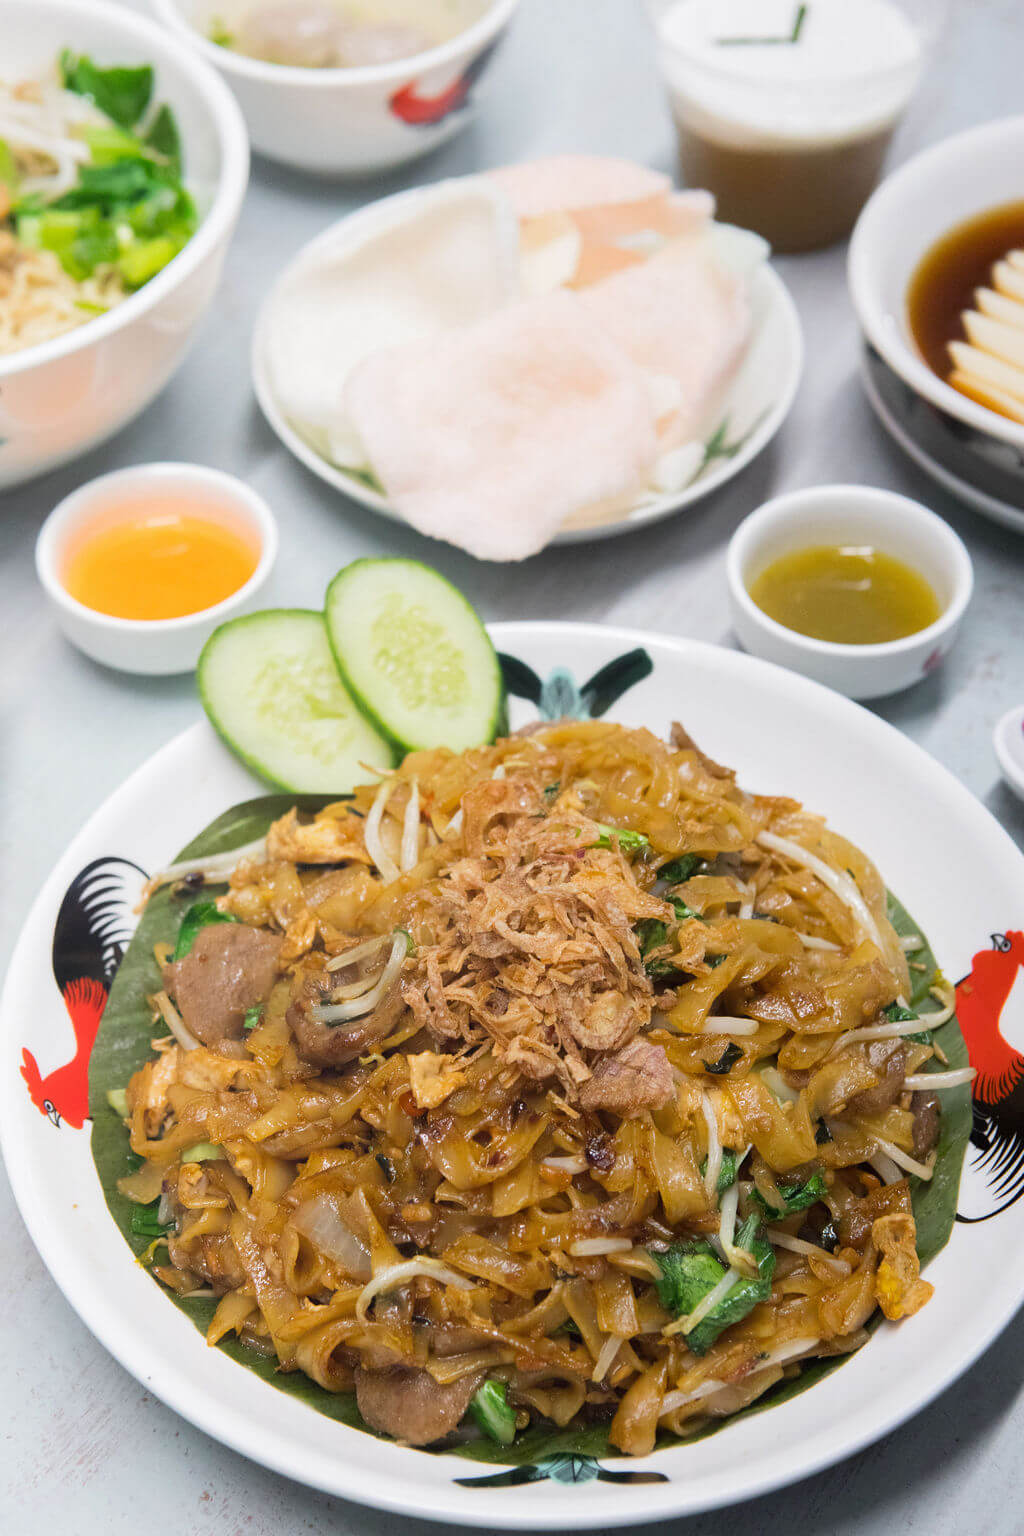 NaiNai Noodles brings Indonesian comfort food to King West